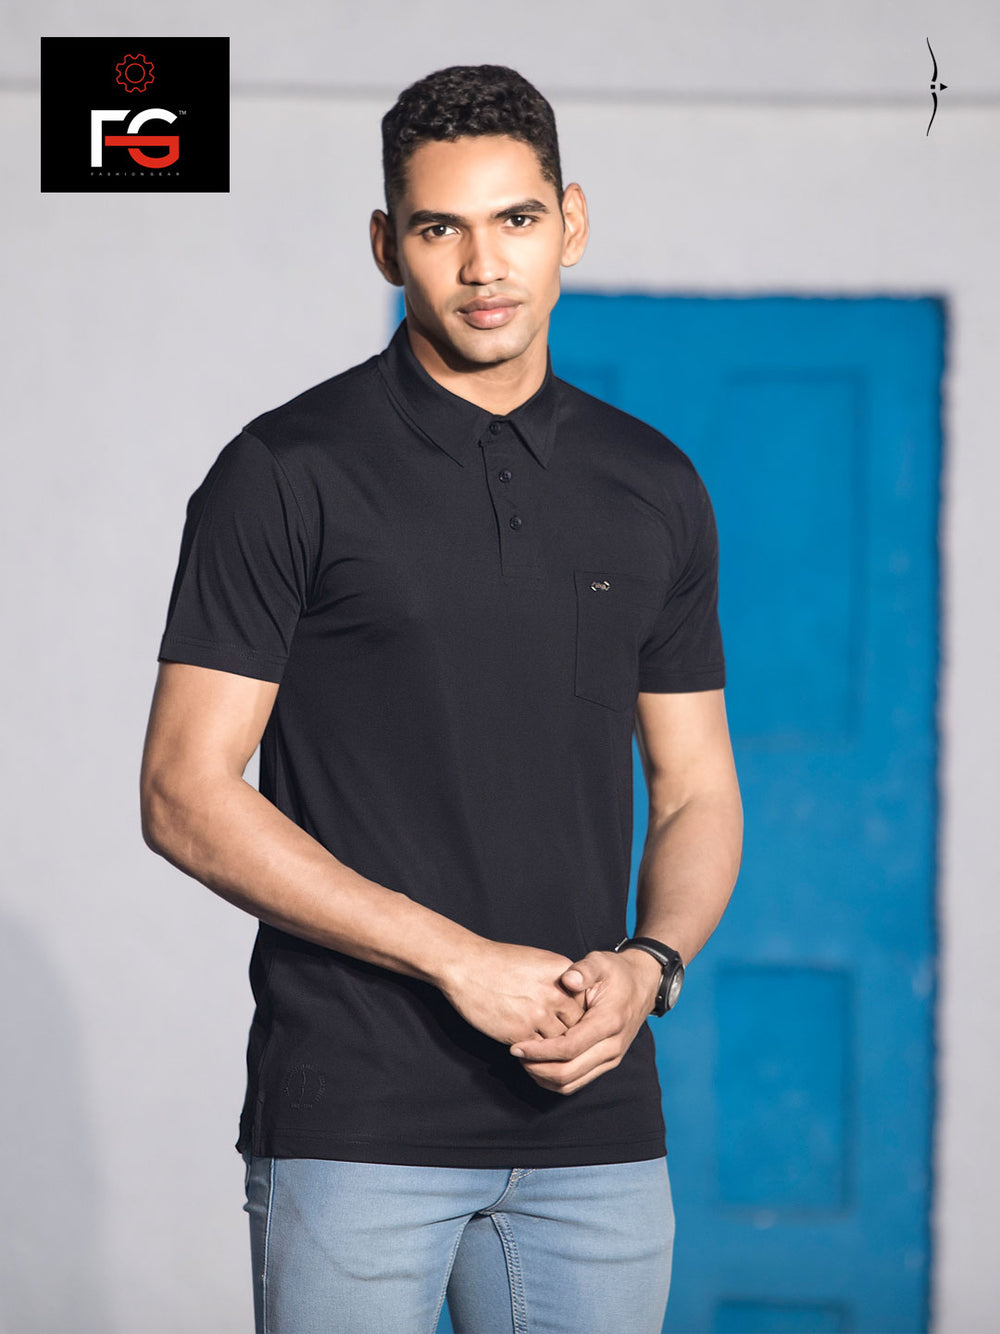 f.g-1225 collar half sleeve black polo tshirt for men#color_black